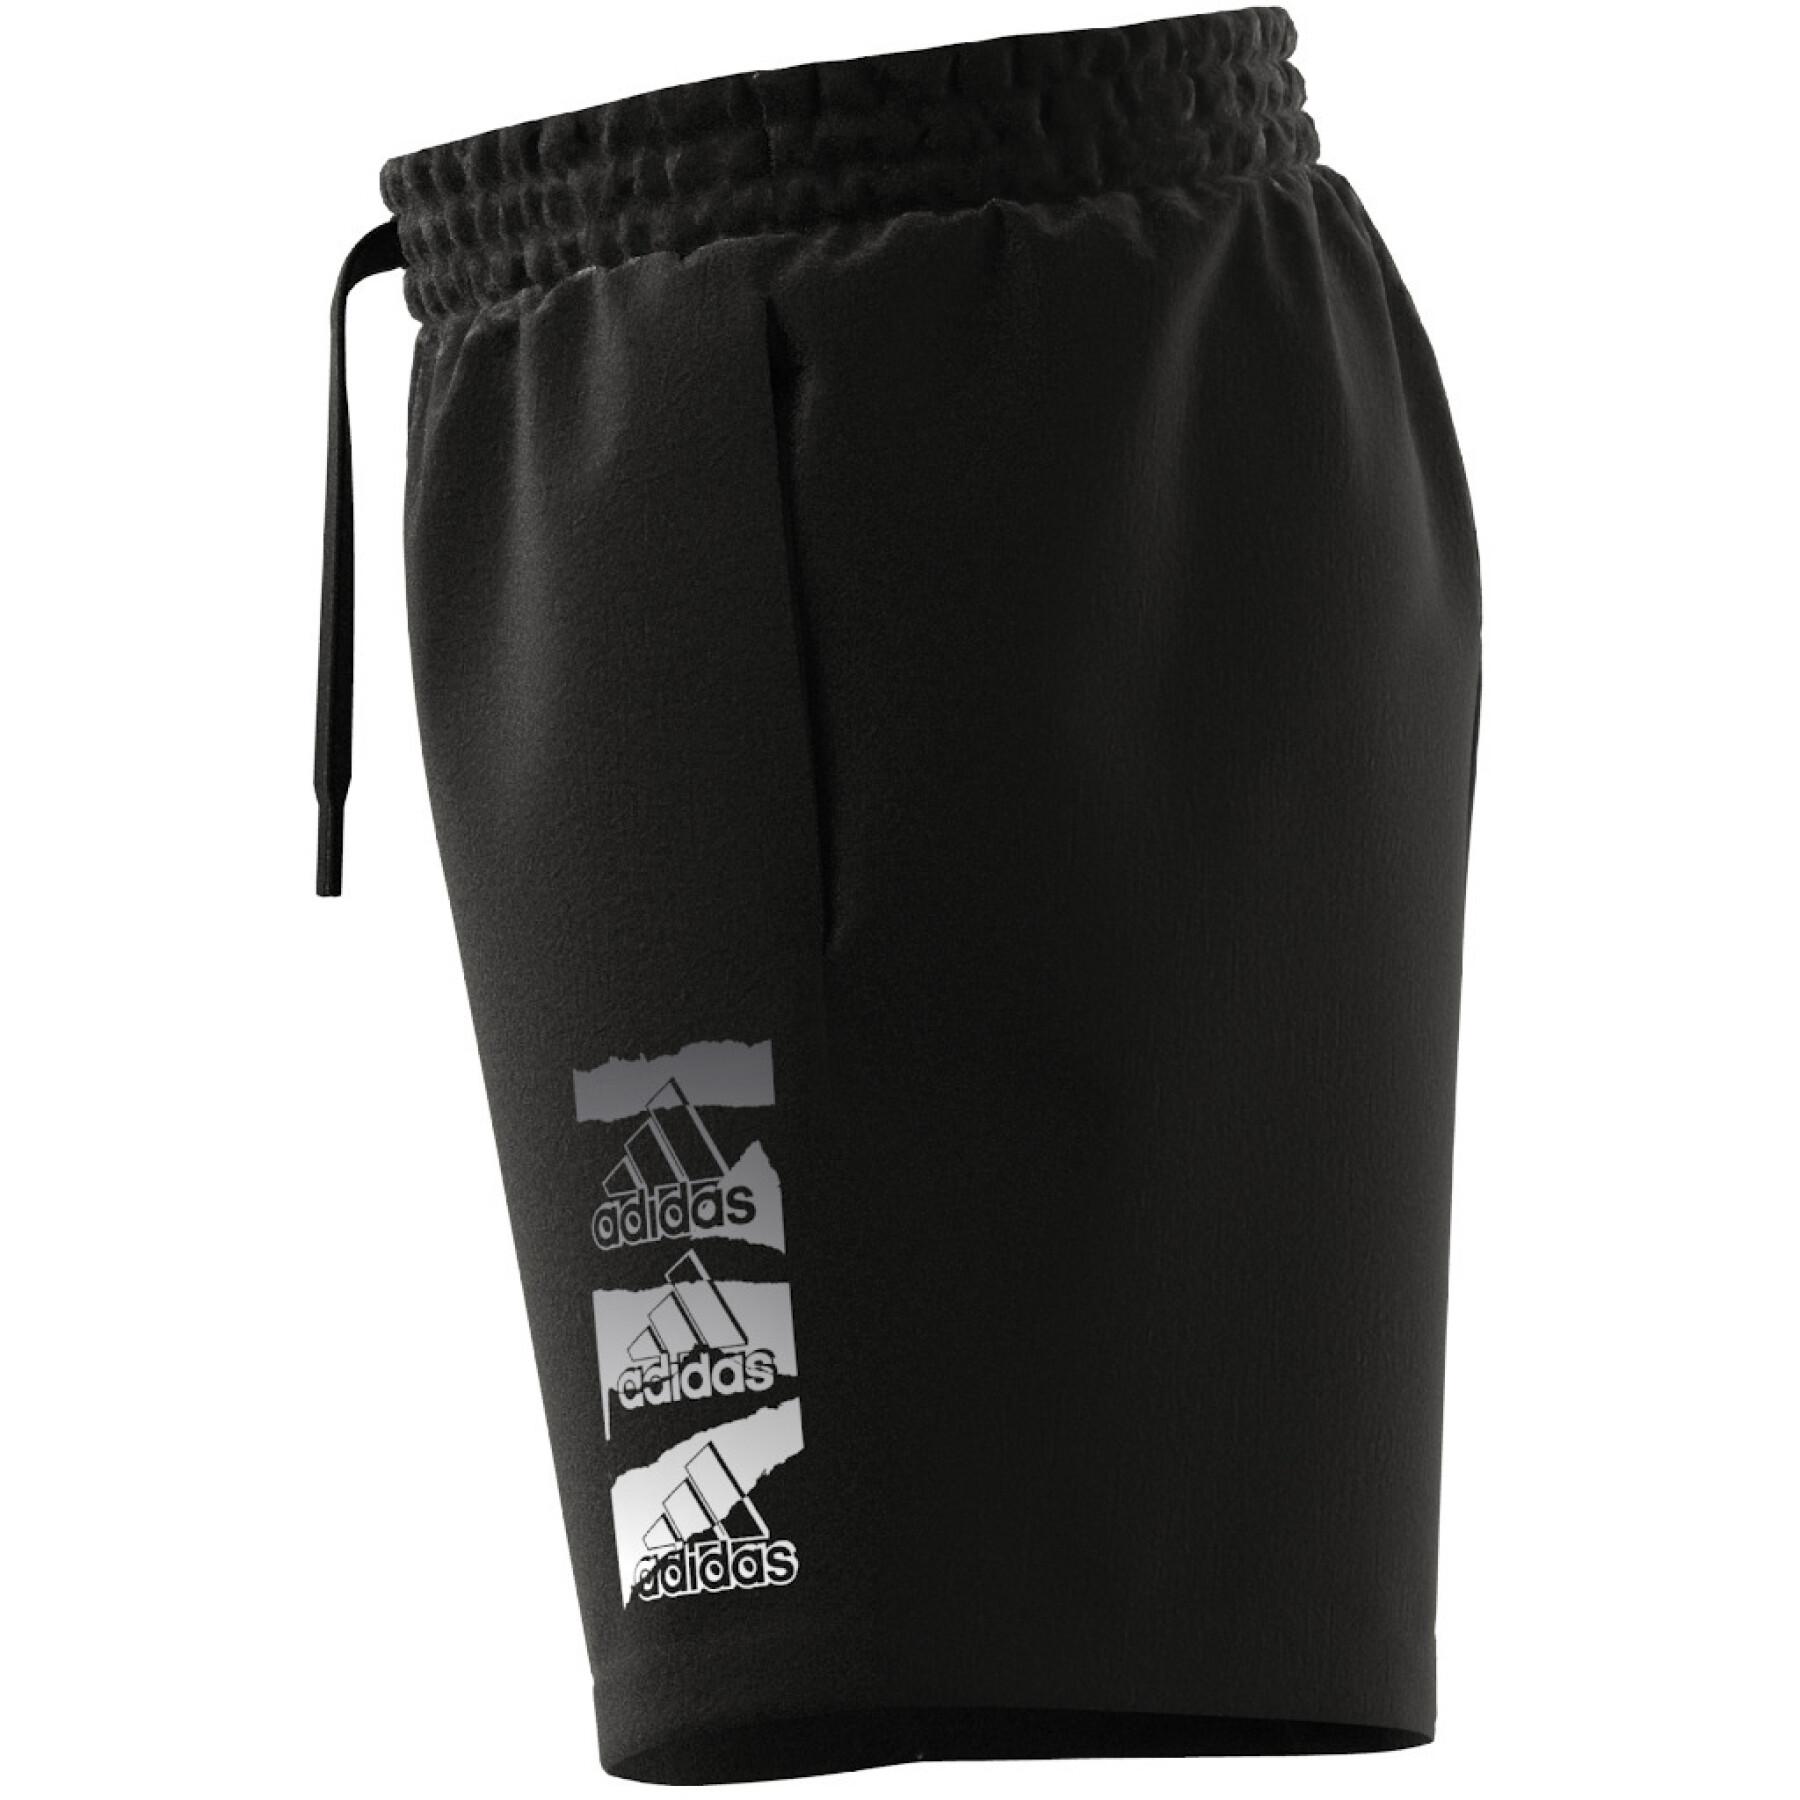 - - BrandLove Essentials Fitness Chelsea Clothing - Shorts Men\'s Woven adidas shorts